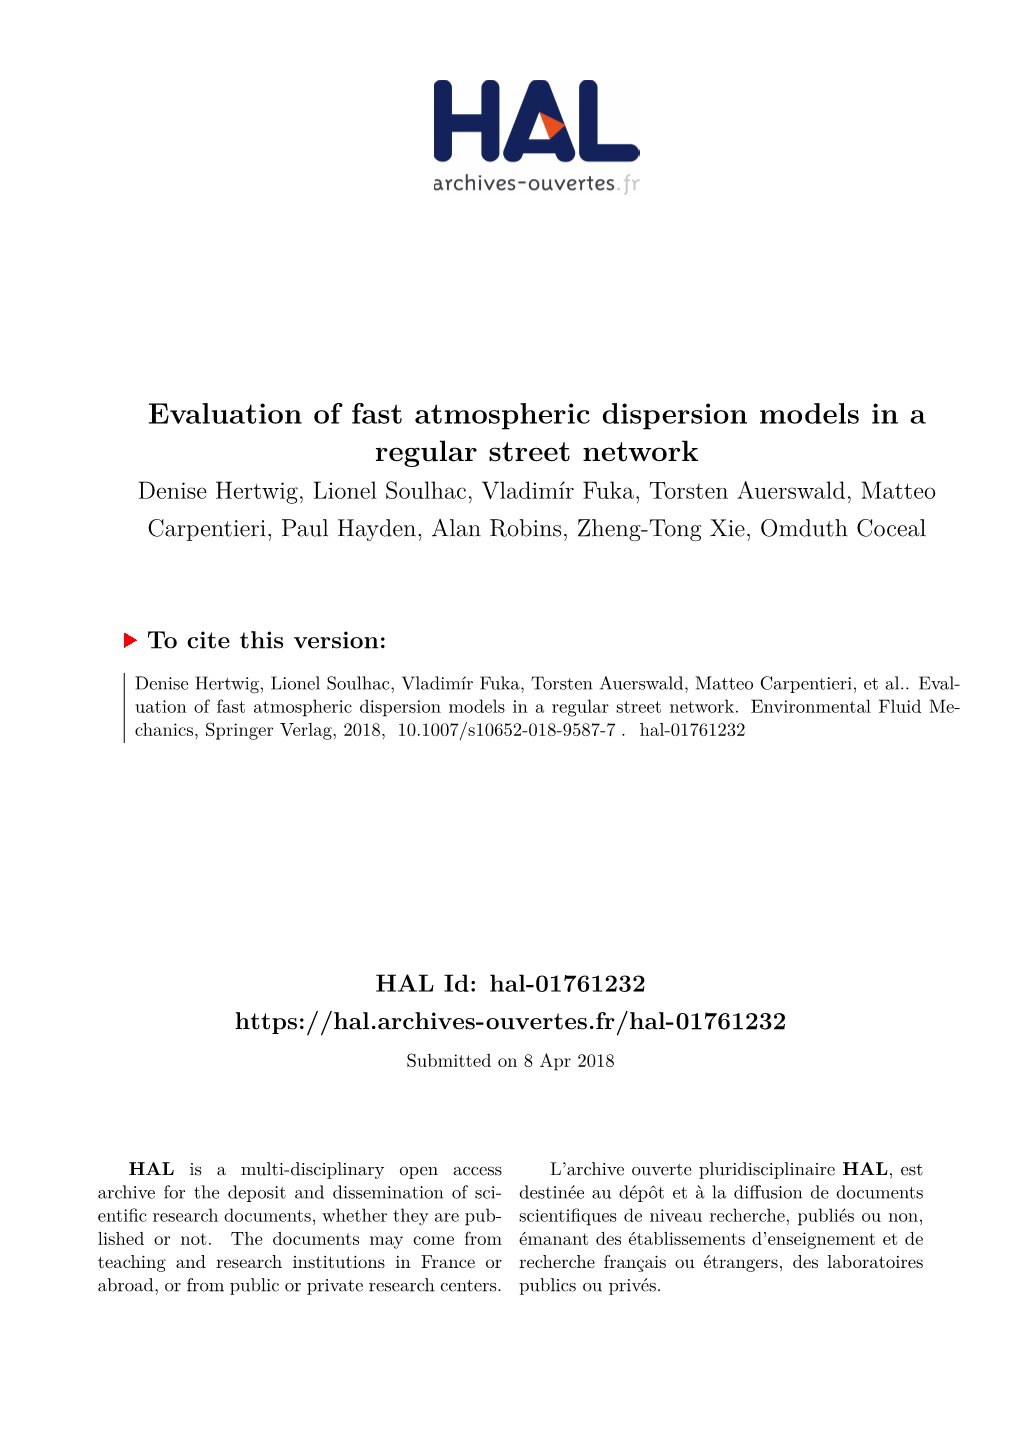 Evaluation of Fast Atmospheric Dispersion Models in a Regular